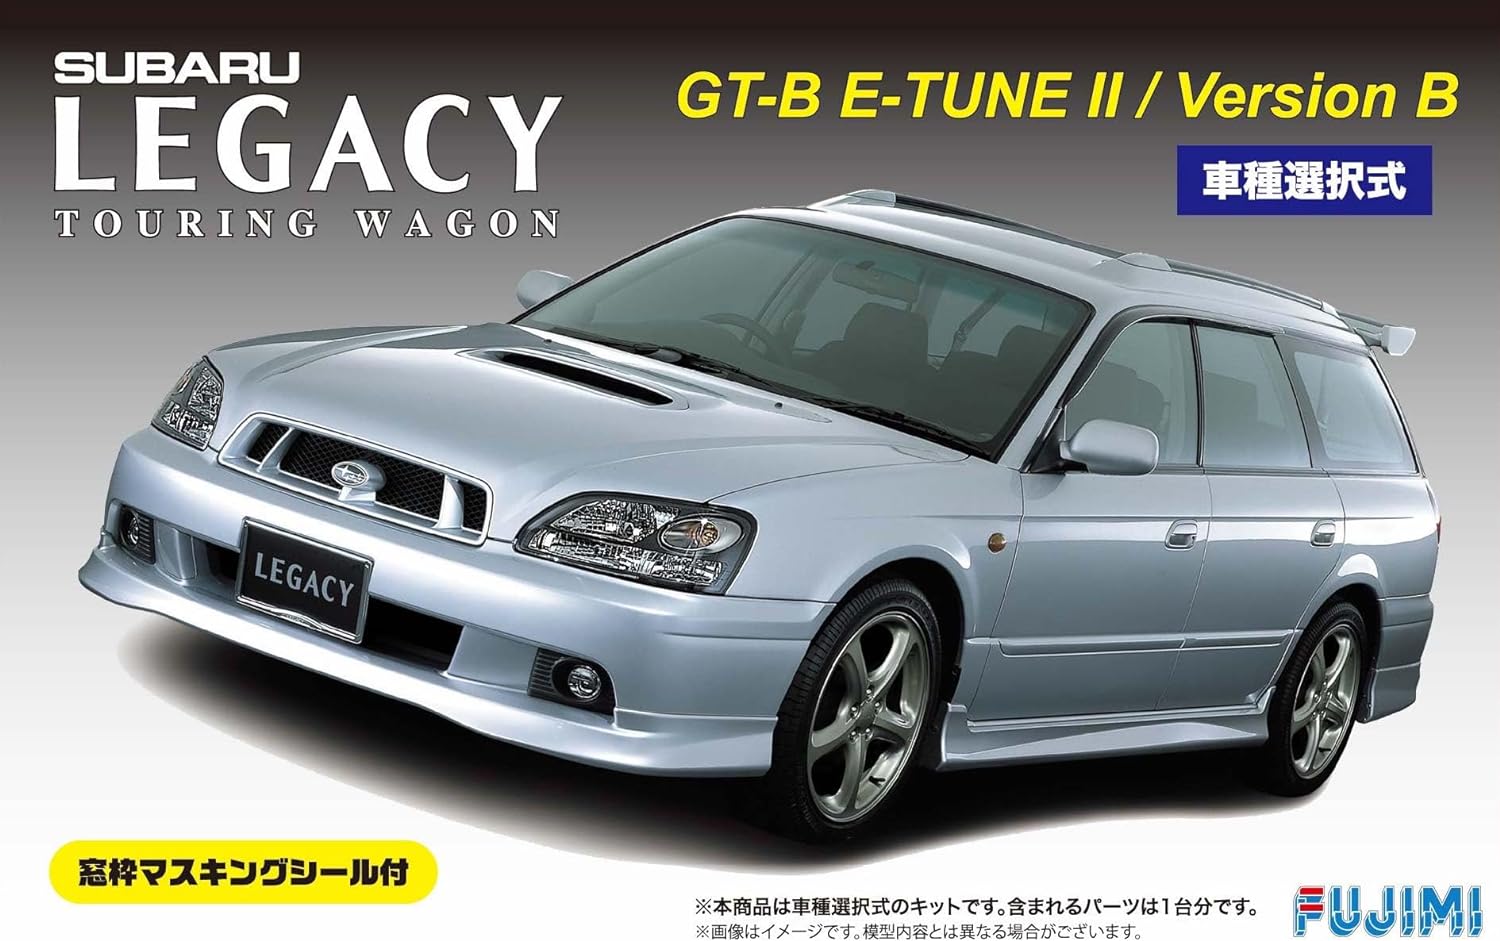 Fujimi ID077 1/24 Inch Up Series No. 77 Subaru Legacy Touring Wagon GT-B E-tune II/Version - BanzaiHobby